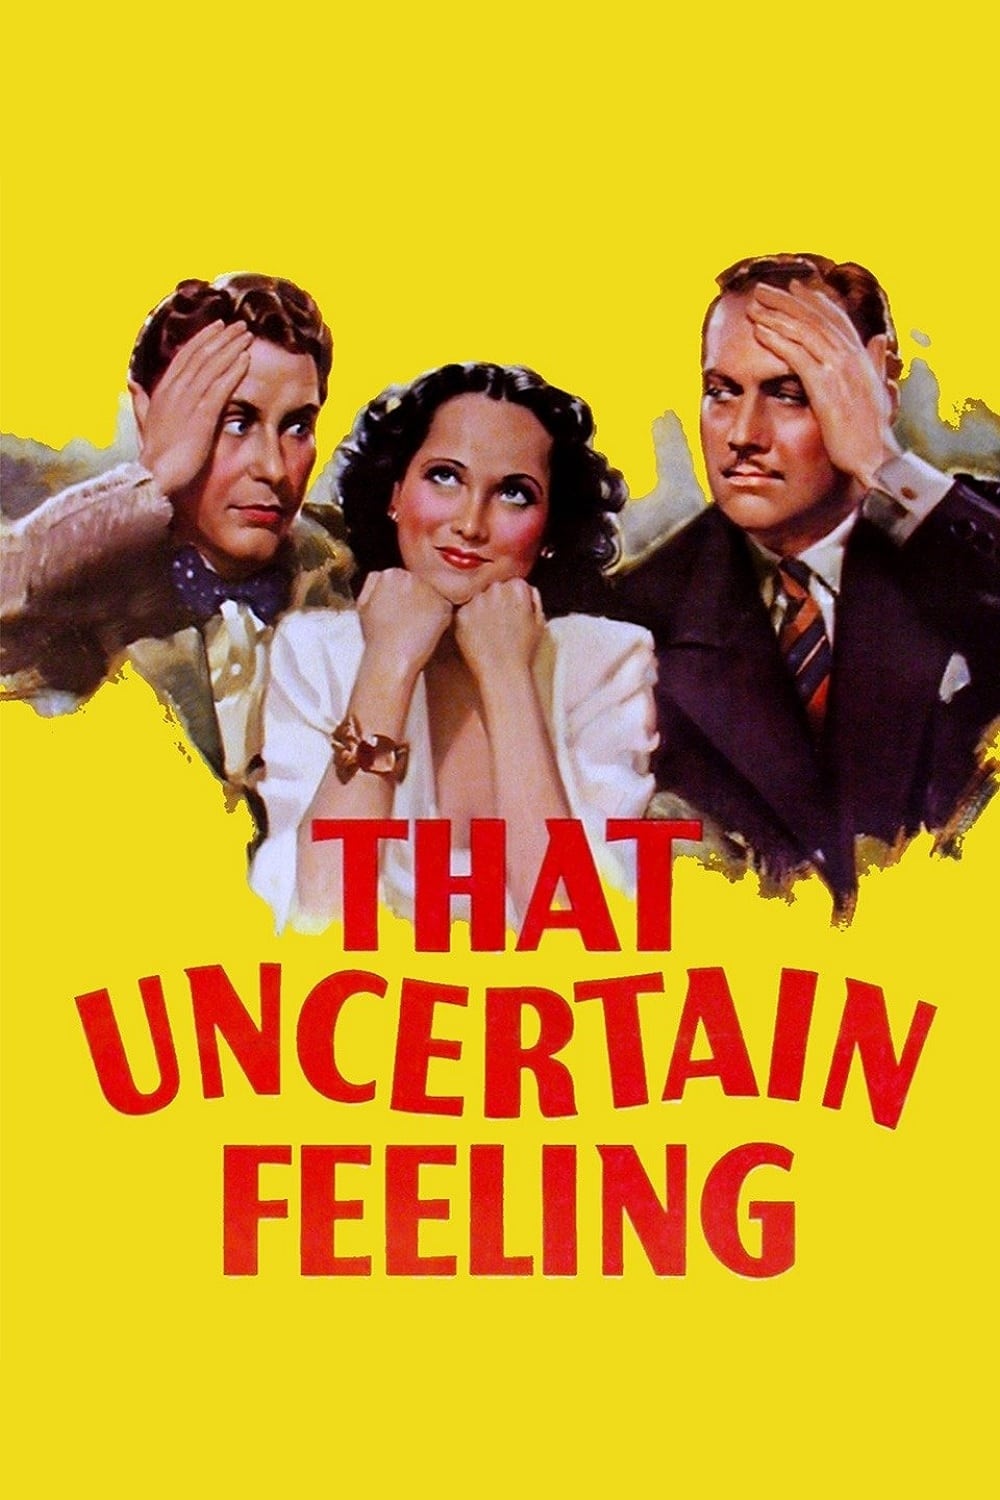 That Uncertain Feeling (1941)